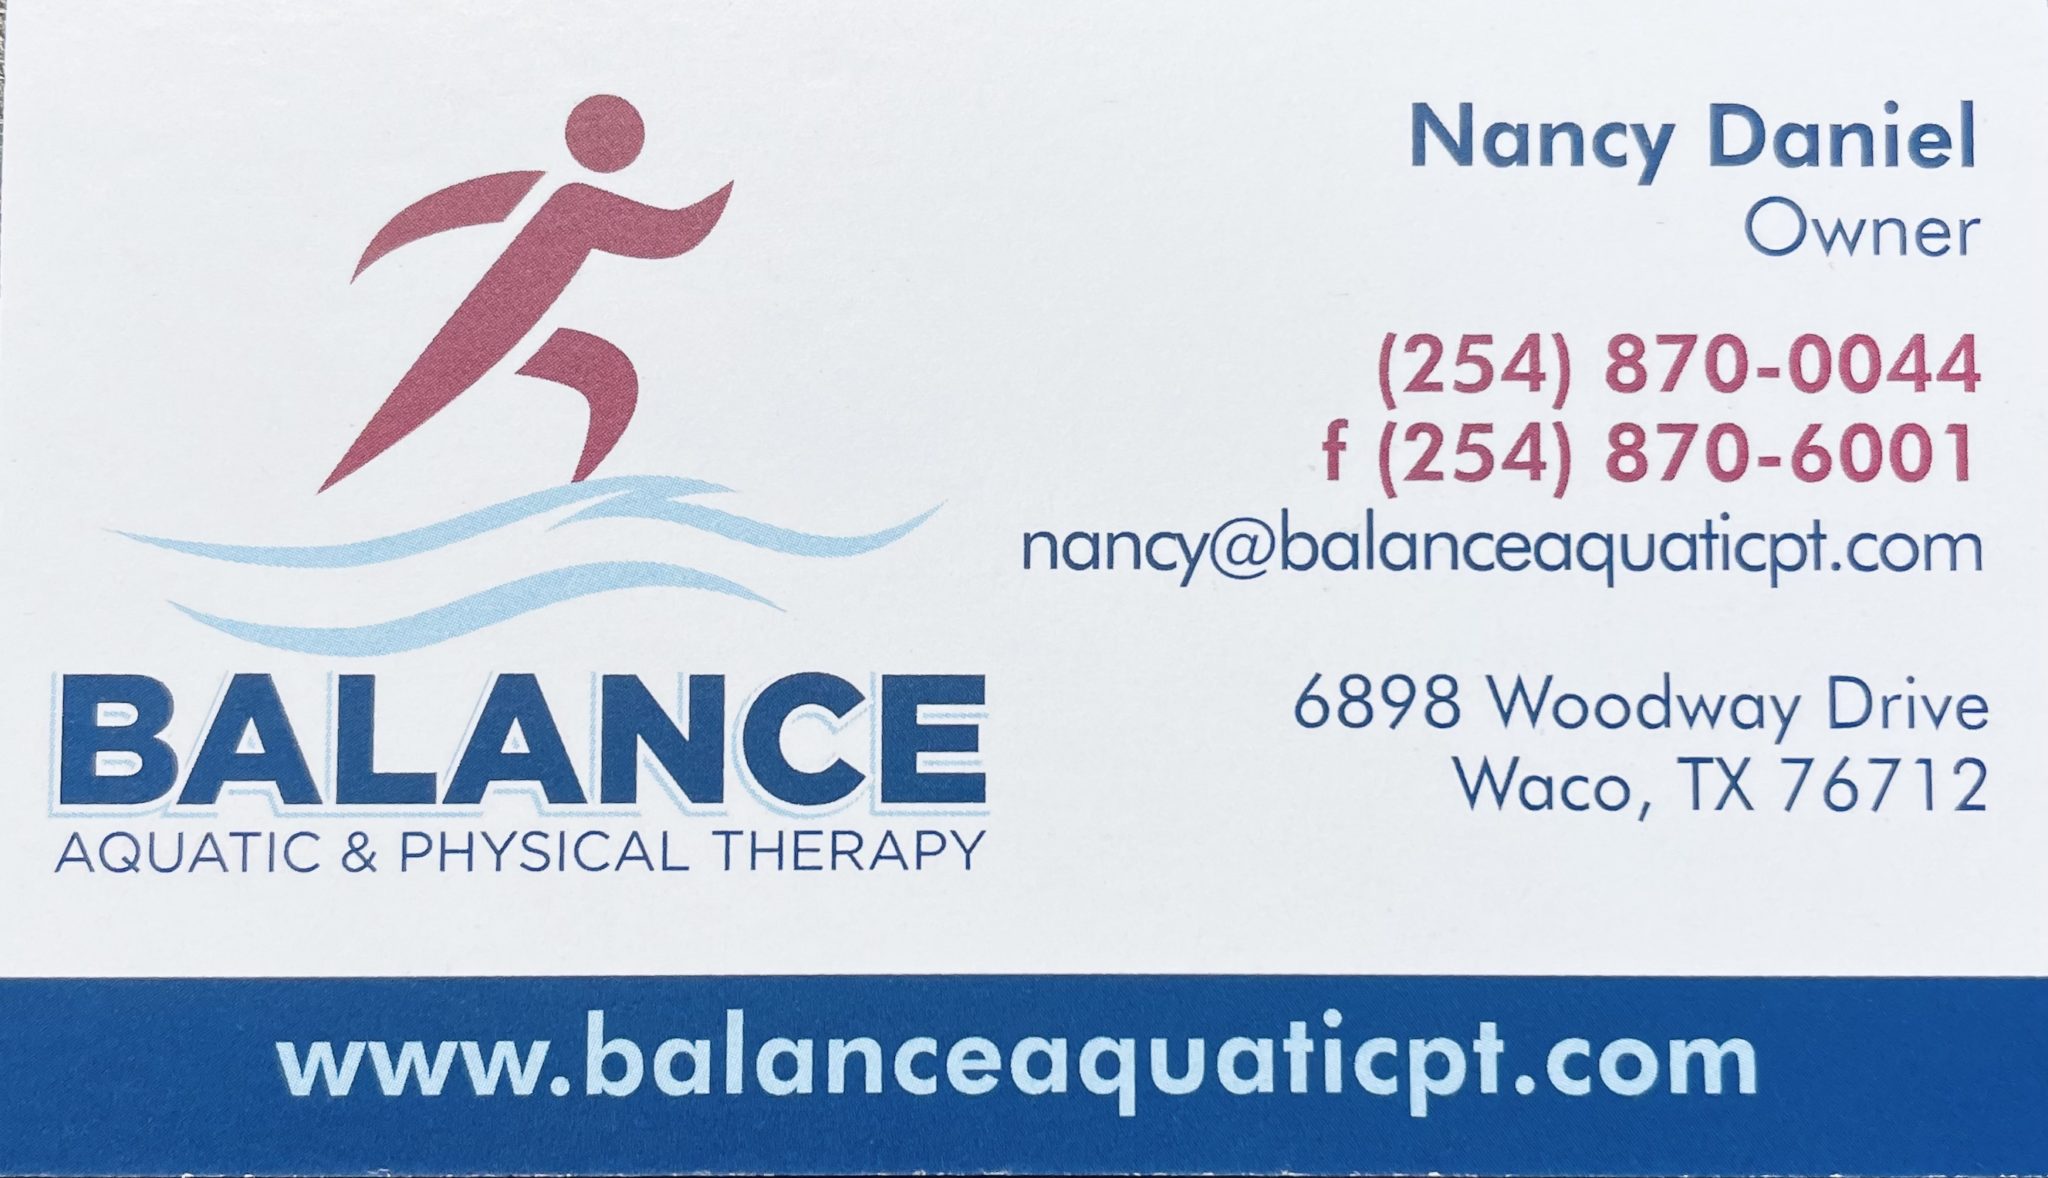 Balance Aquatic & Physical Therapy Waco, Texas - Nancy Daniel